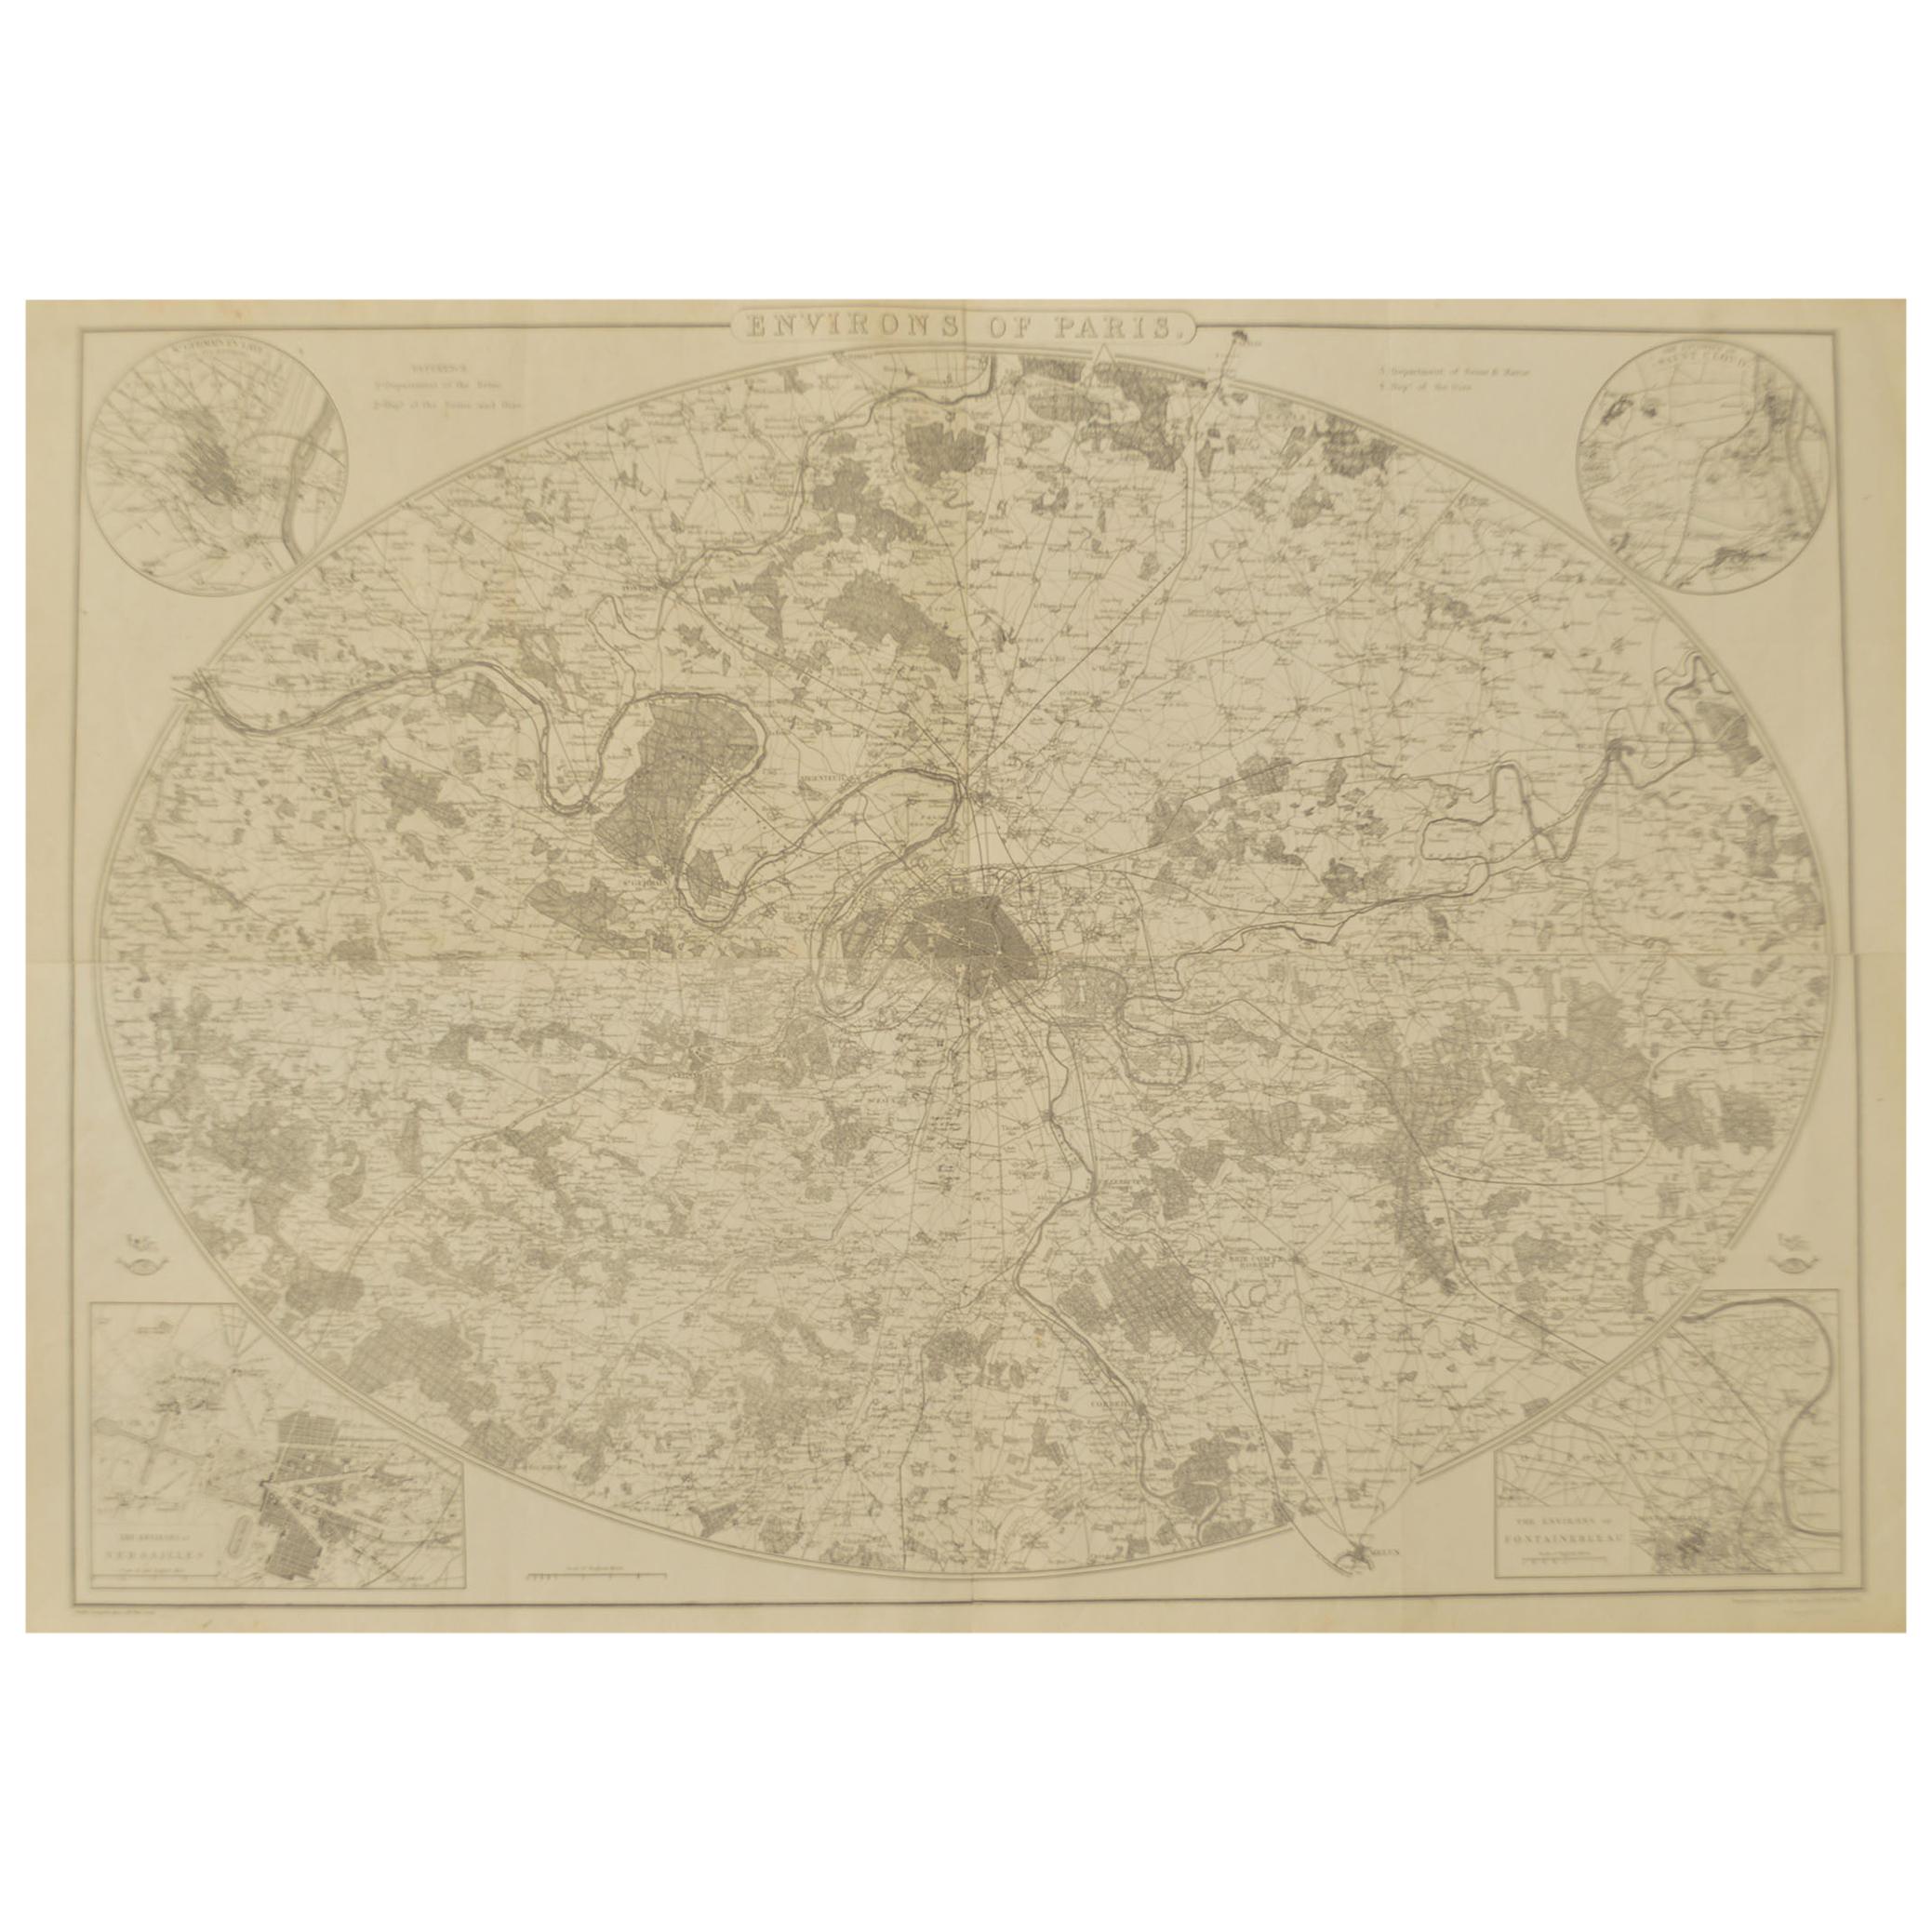 Original Large Antique Map of Paris, France by John Dower, 1861.